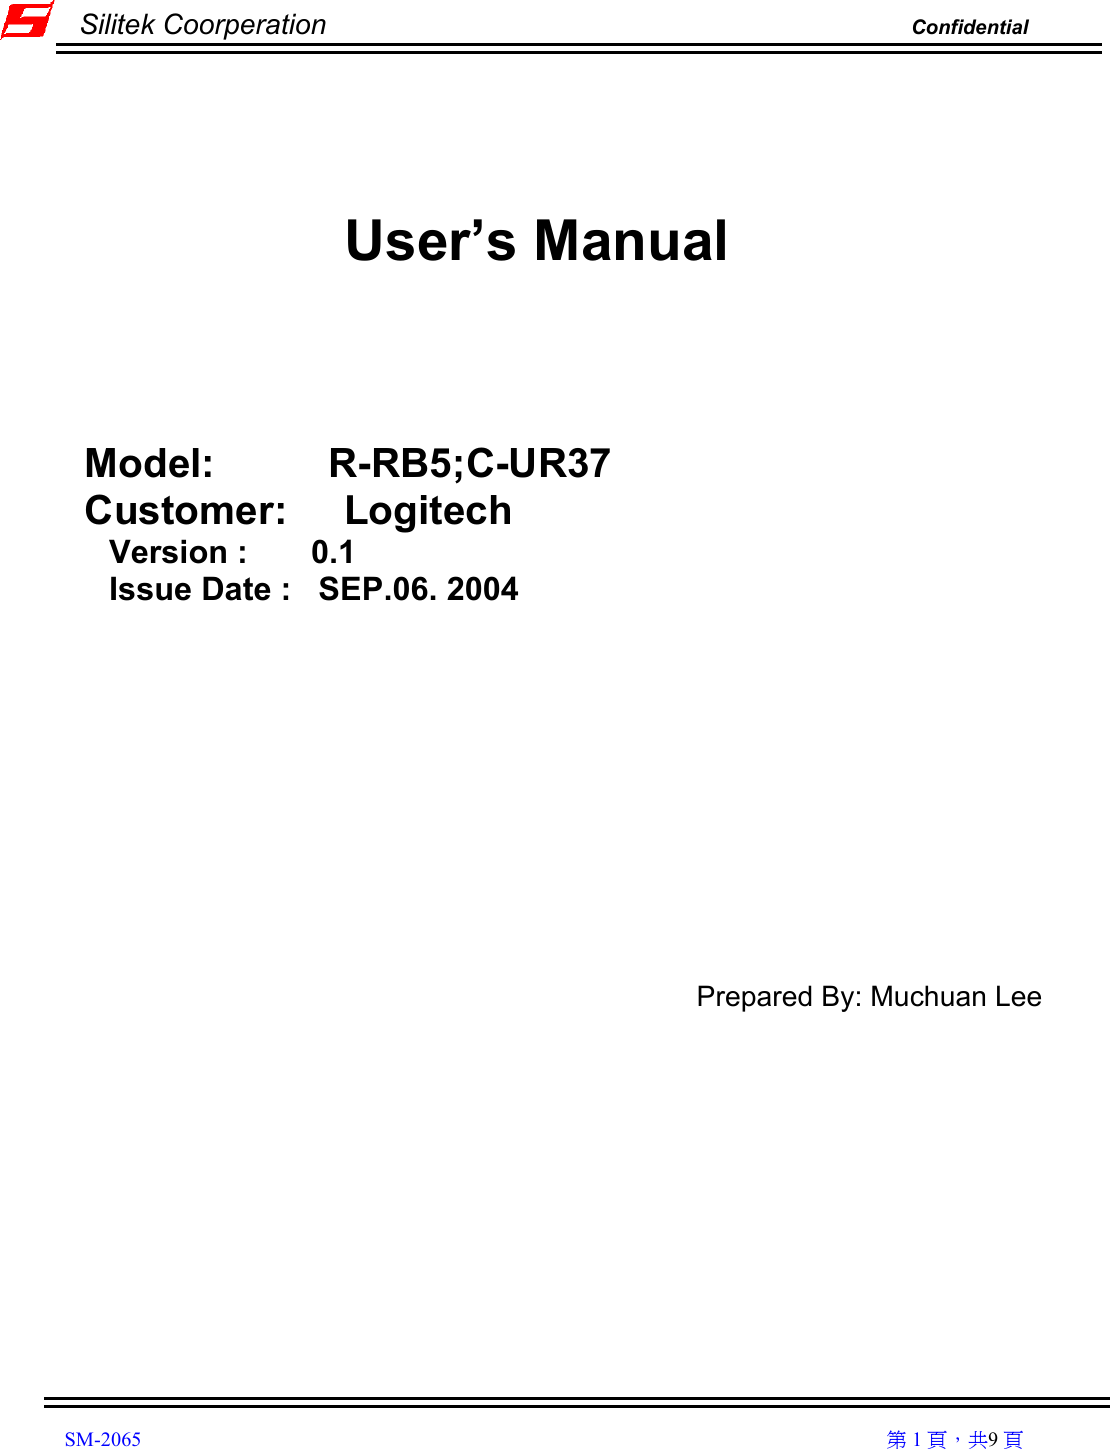         Silitek Coorperation                                                                Confidential                       SM-2065                                                                                                                                                   1 9                        User’s Manual     Model:          R-RB5;C-UR37 Customer:     Logitech Version :       0.1 Issue Date :   SEP.06. 2004          Prepared By: Muchuan Lee              